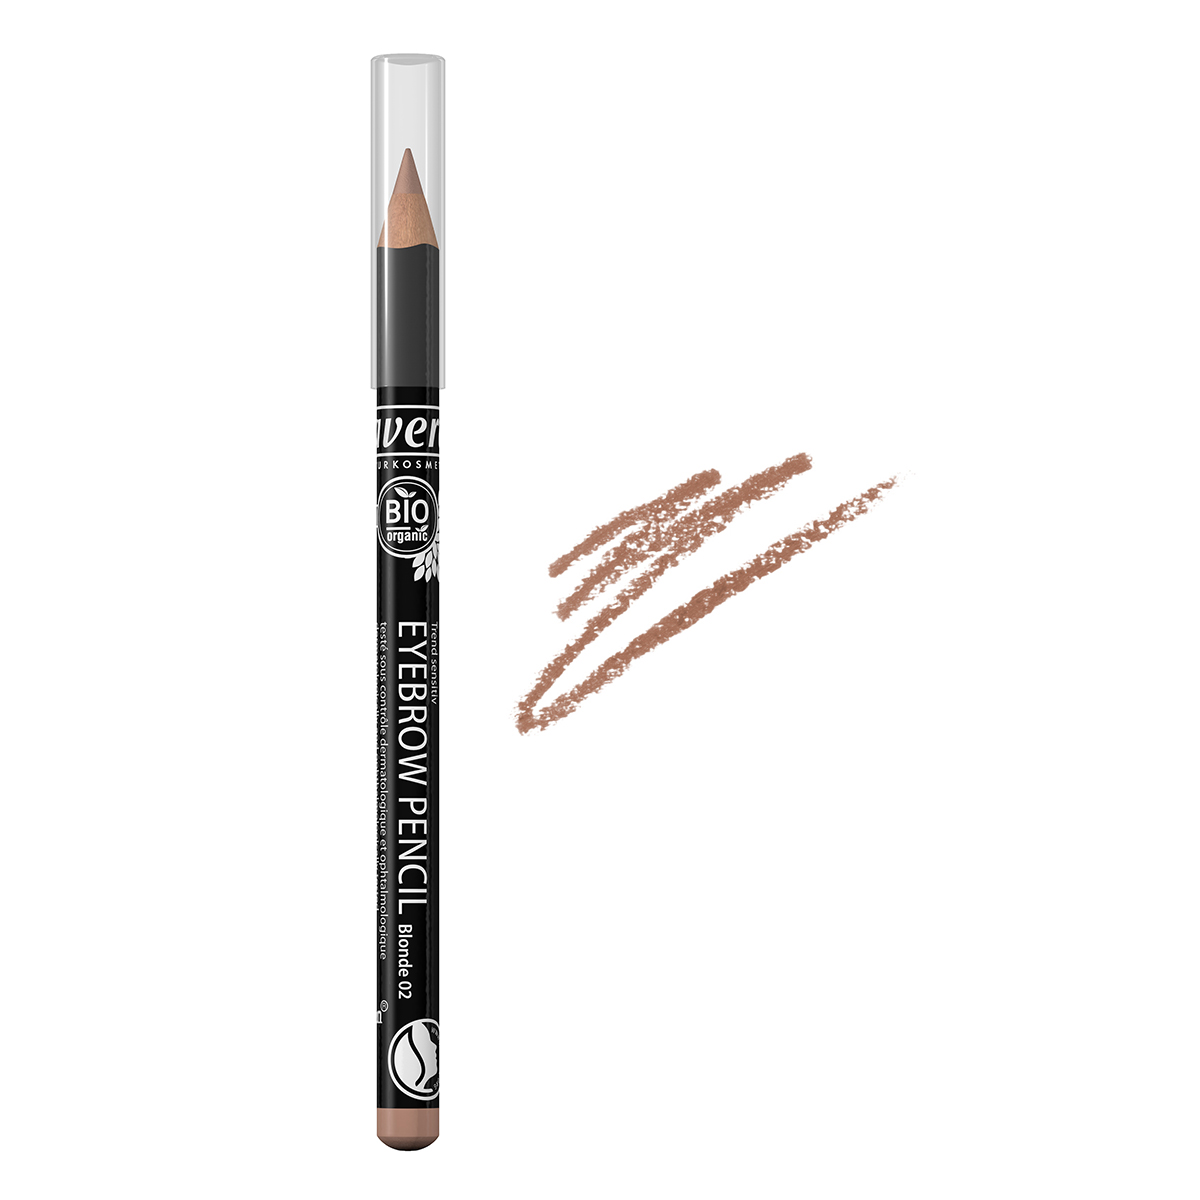 Lavera Organic Eyebrow Pencil - Blonde 02 - 1.14g